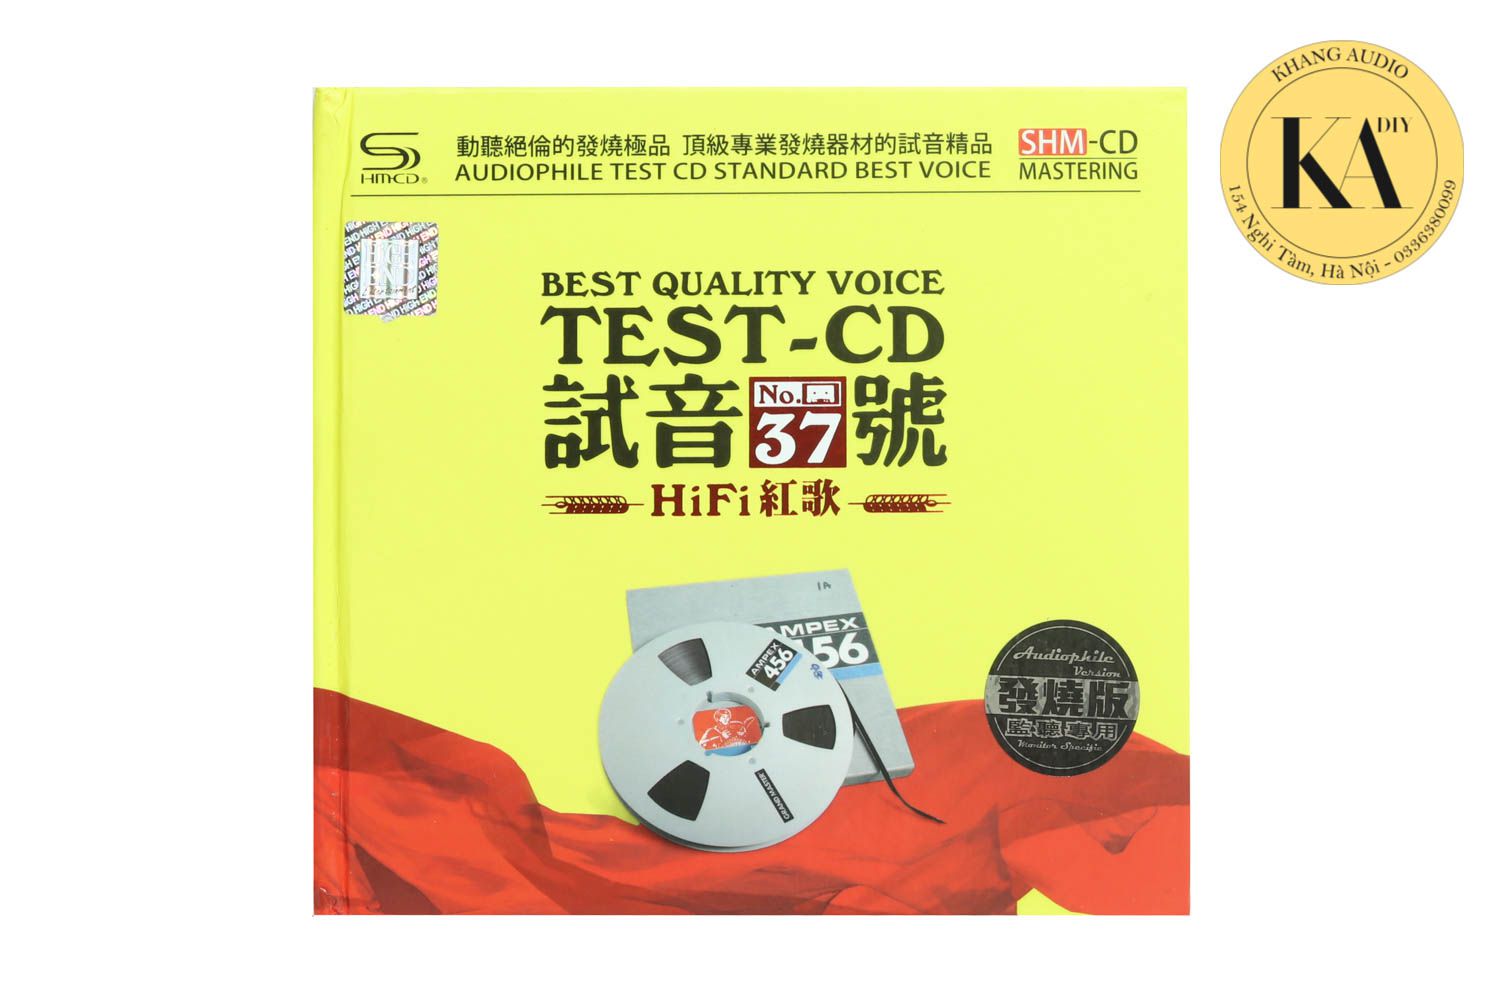 Test CD No.37 Khang Audio 0336380099